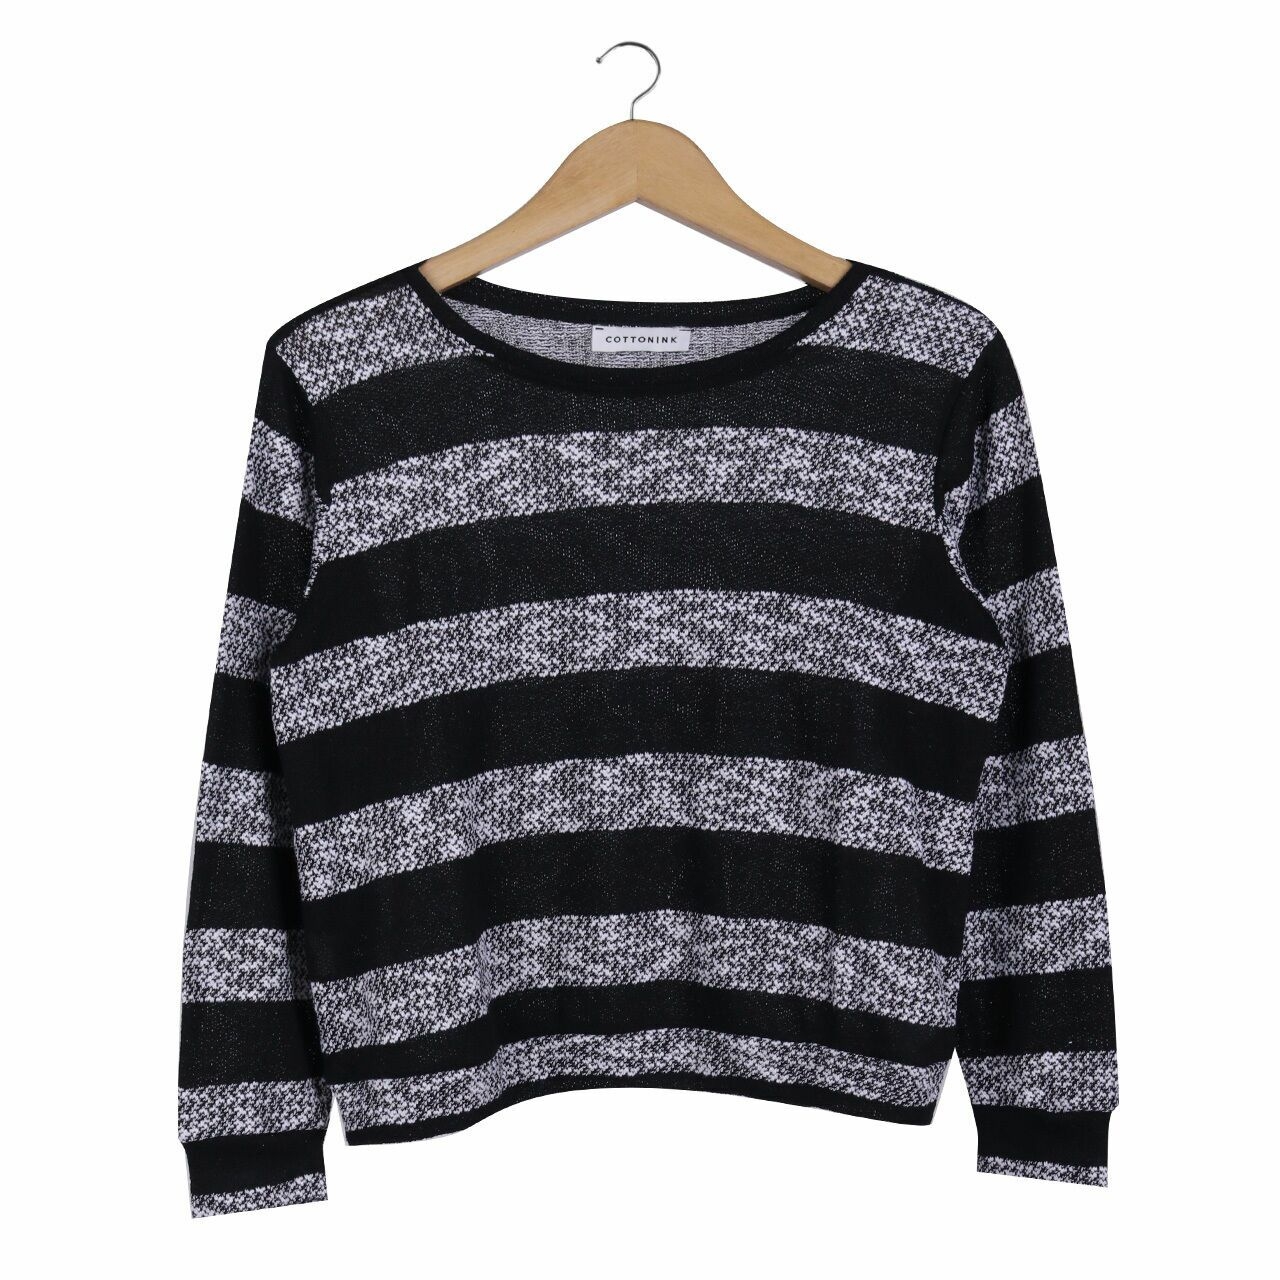 Cotton Ink Black & White Stripes Sweater